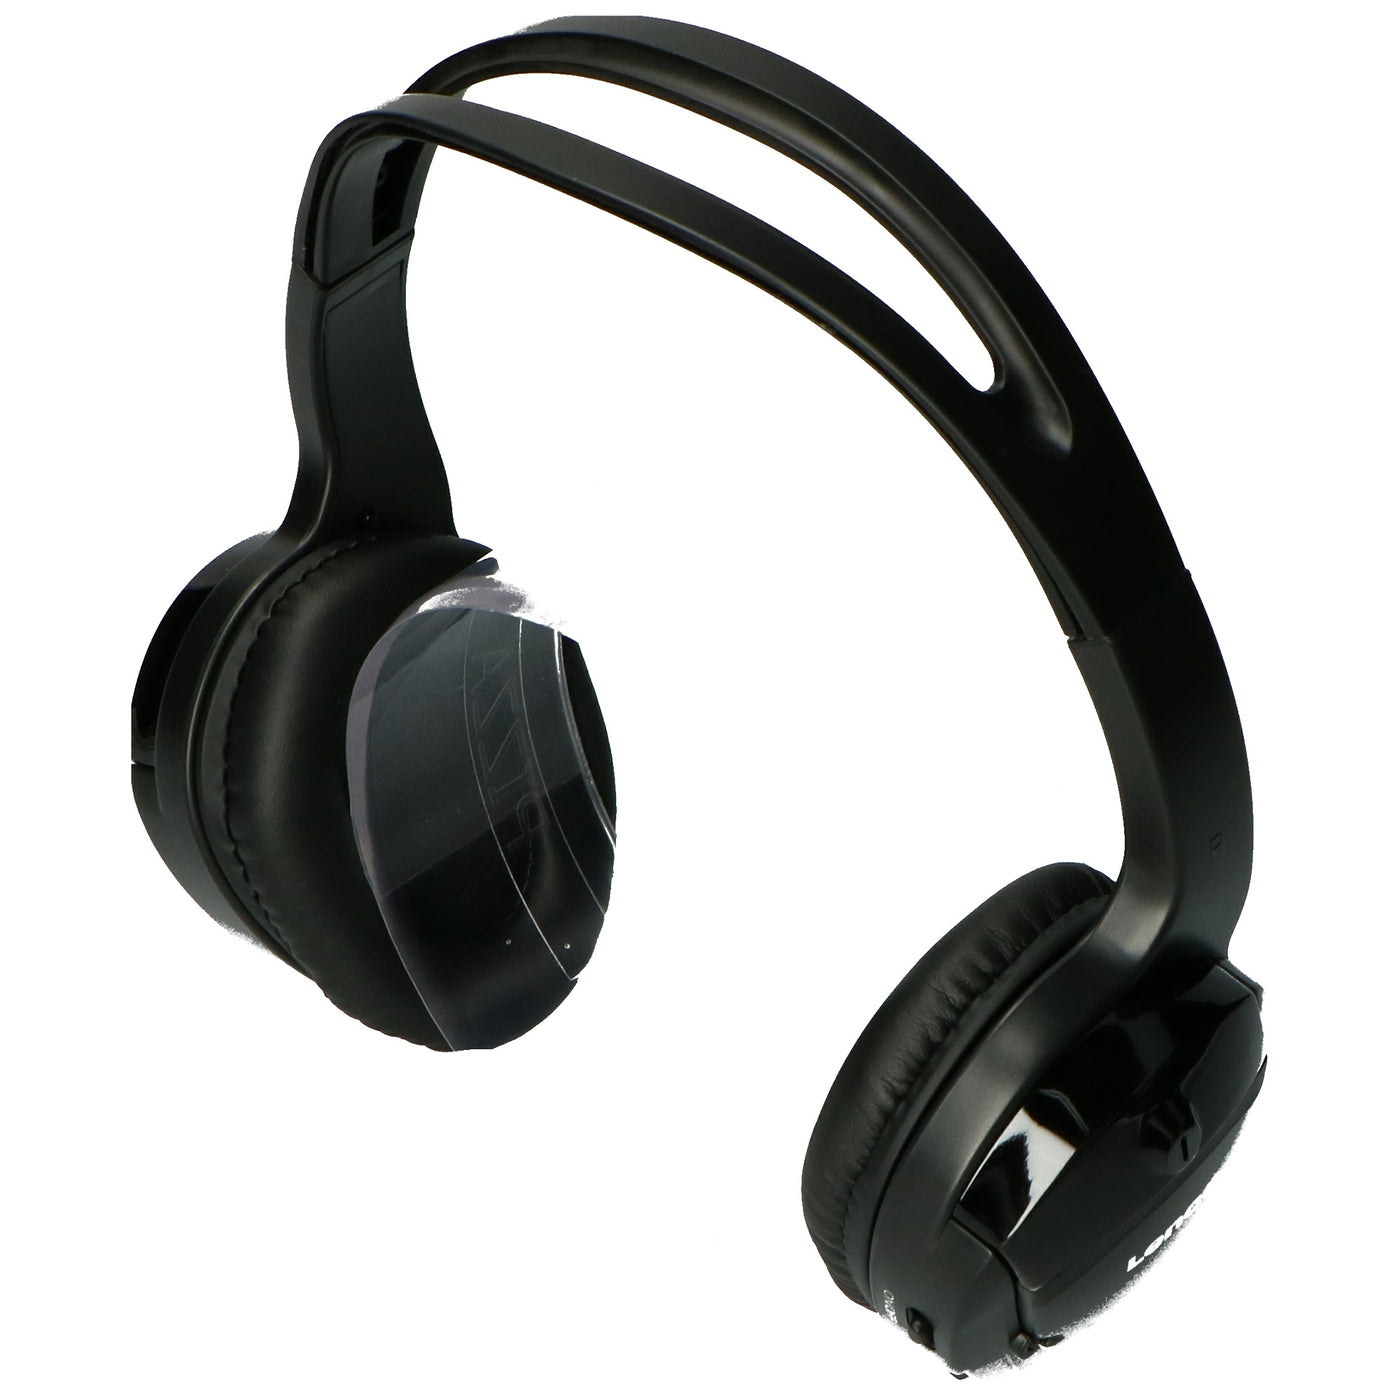 P000327 - Wireless Headphone - Black DVP-937